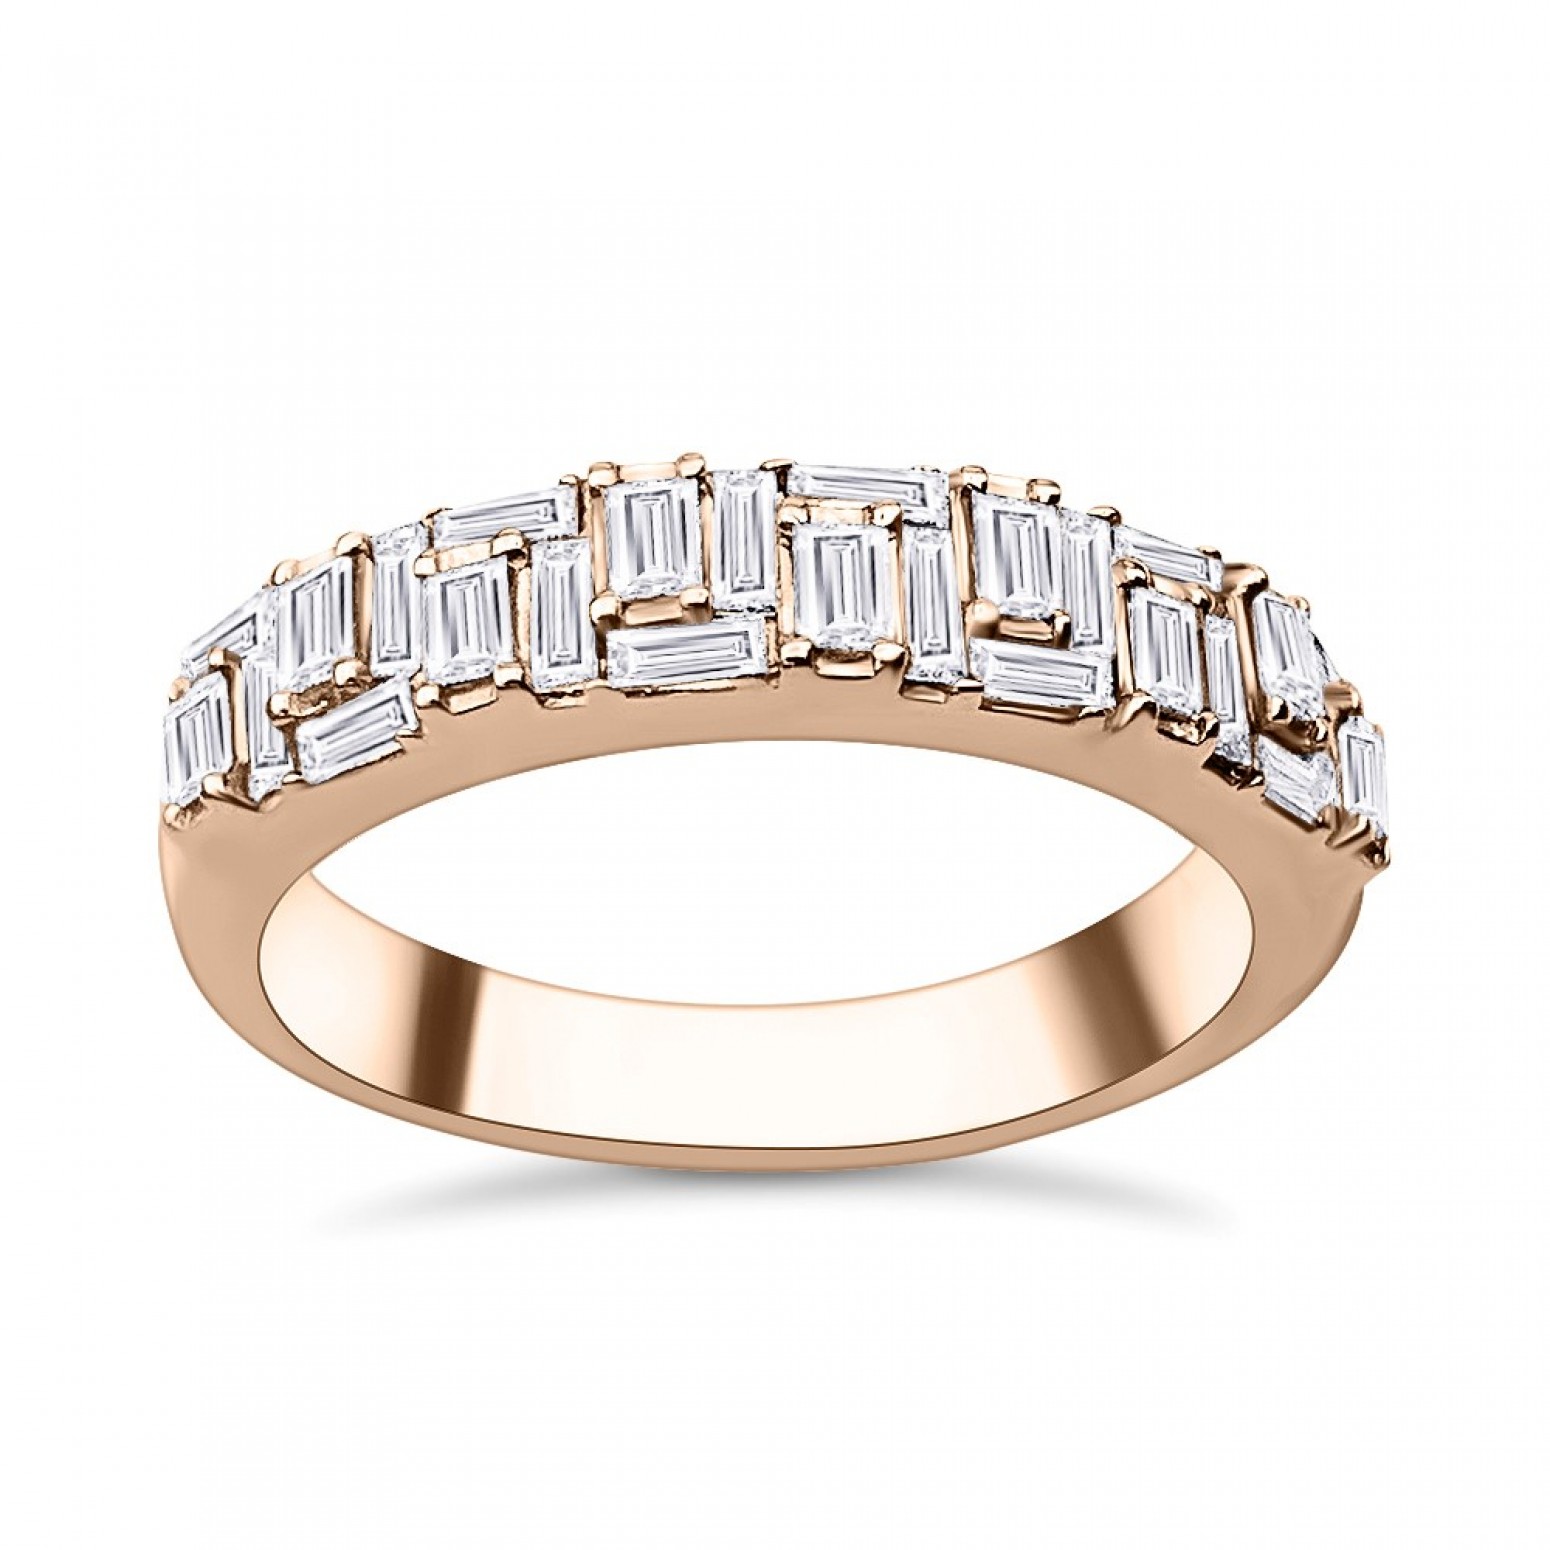 Half stone ring 18K pink gold with diamonds 0.66ct, VS1, F da3439 ENGAGEMENT RINGS Κοσμηματα - chrilia.gr